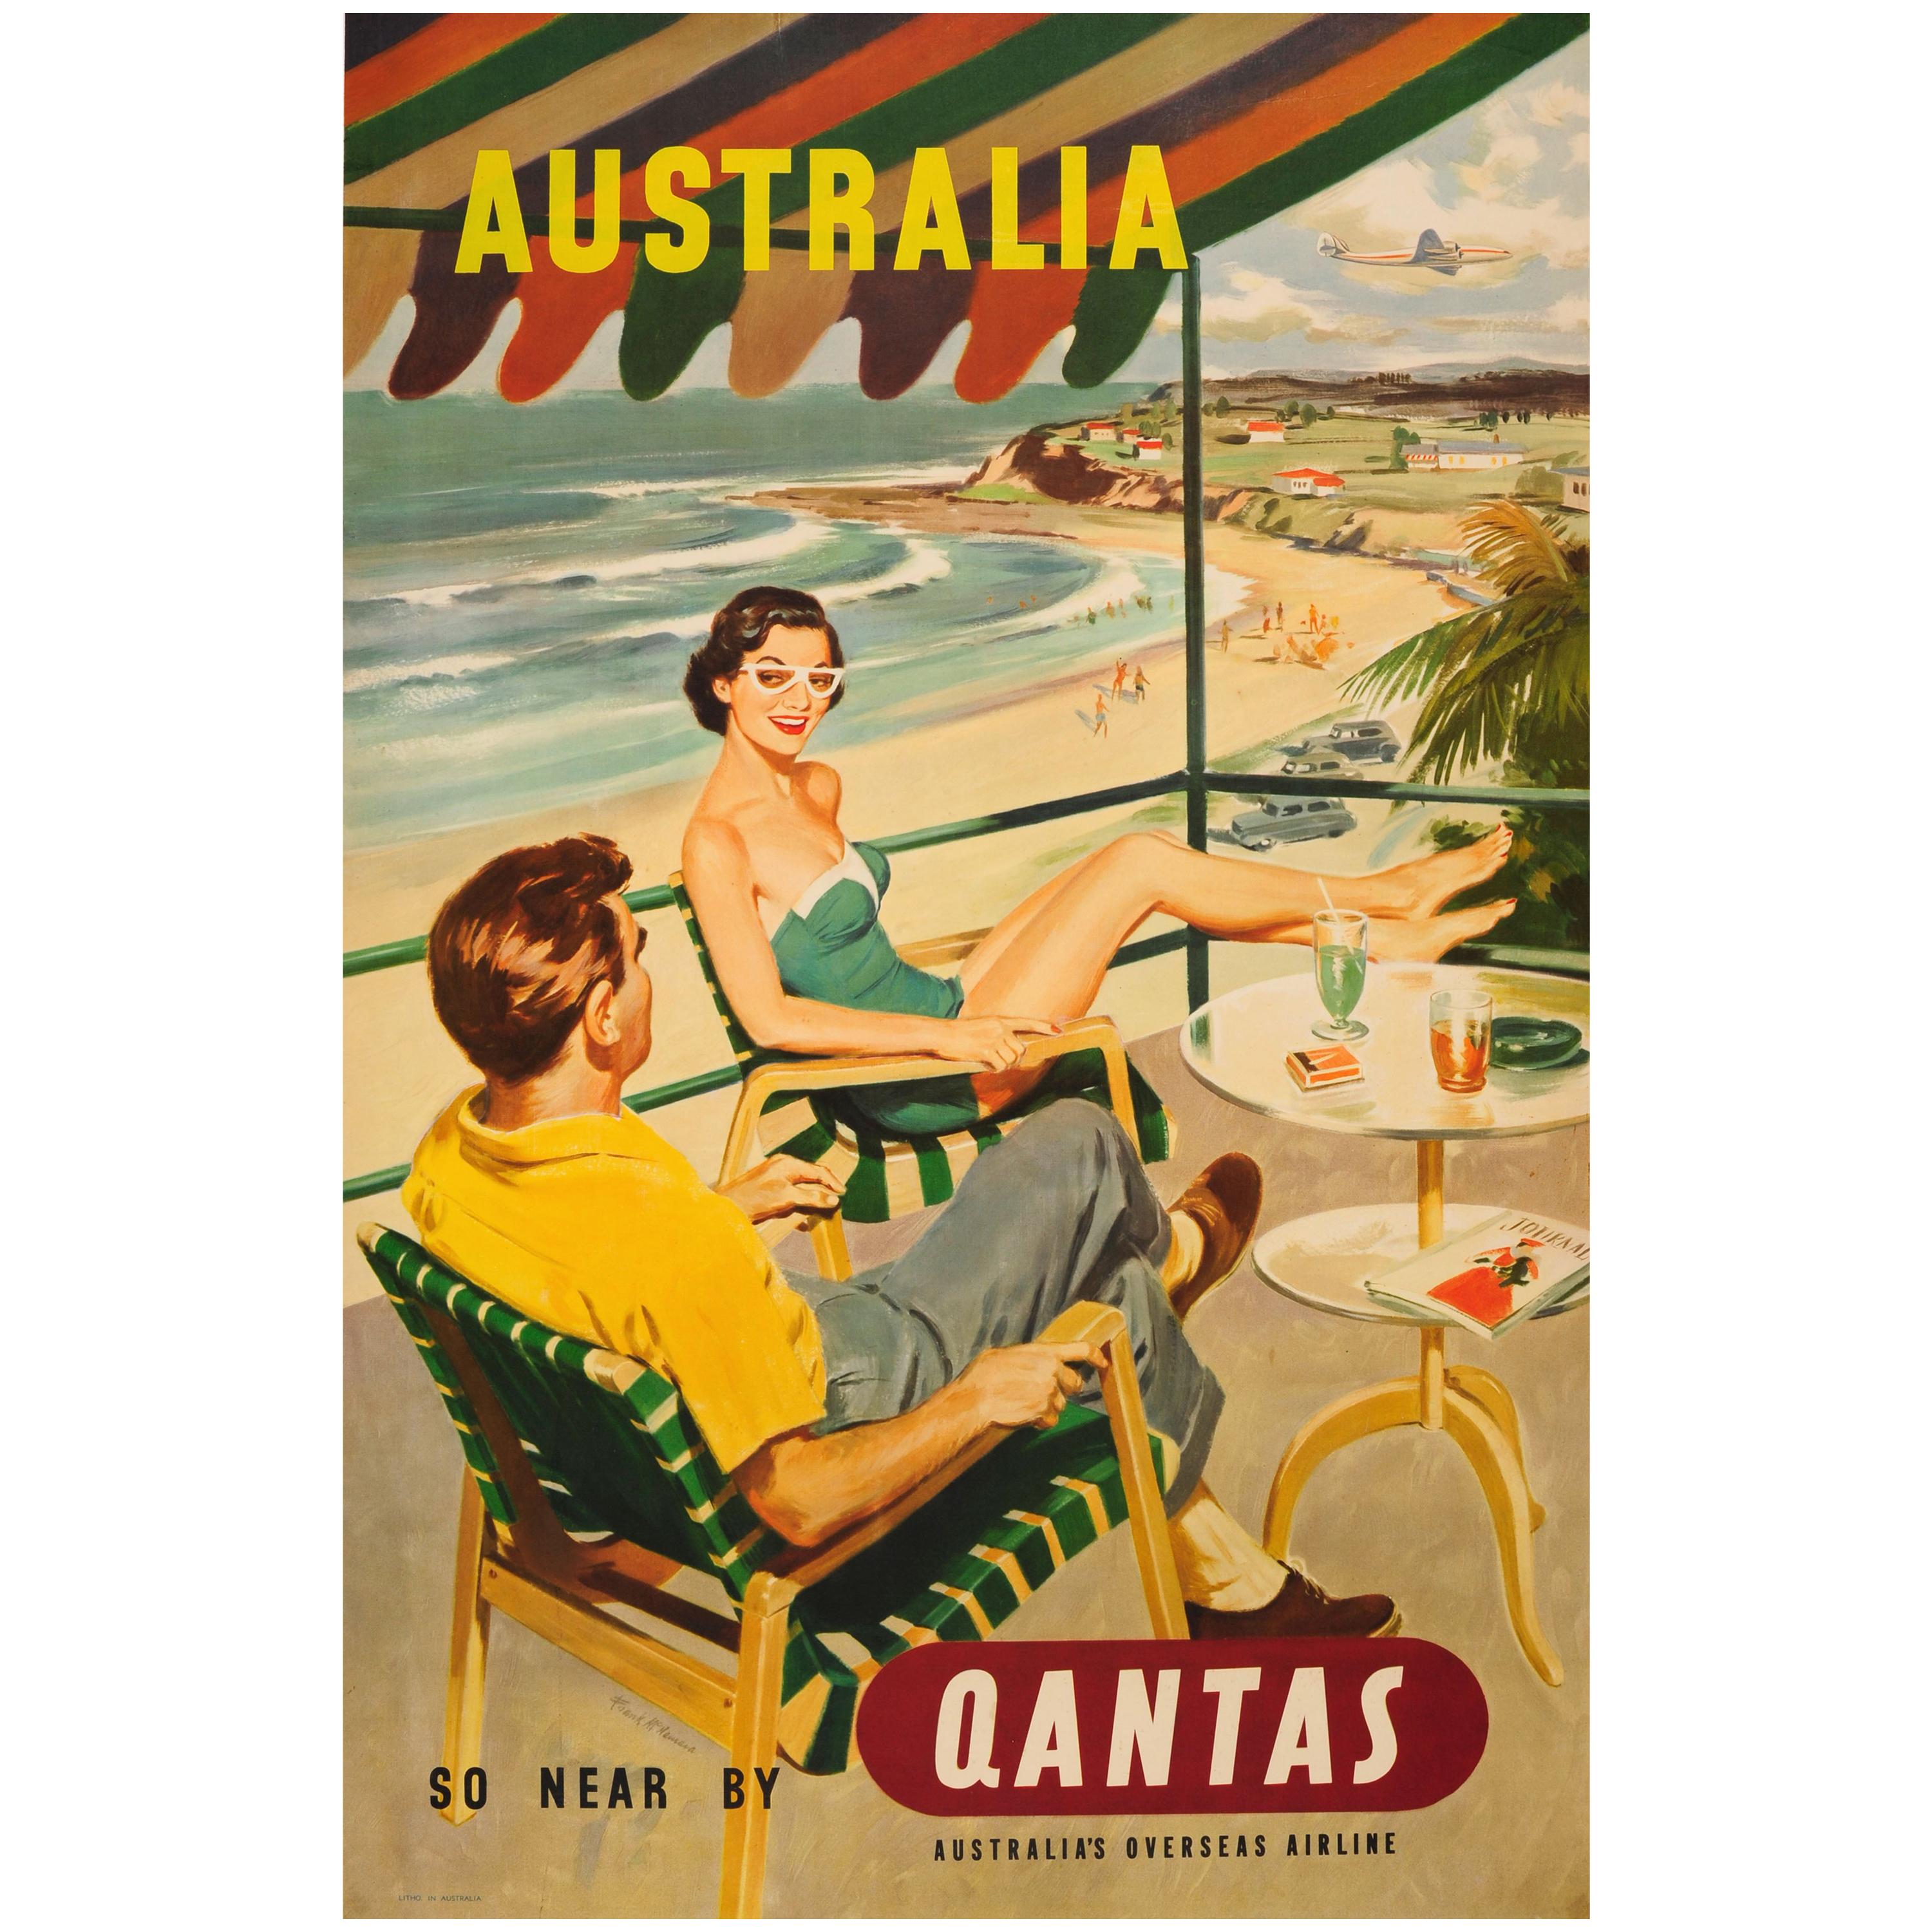 Original Vintage Midcentury Travel Poster - Australia So Near by Qantas Airline